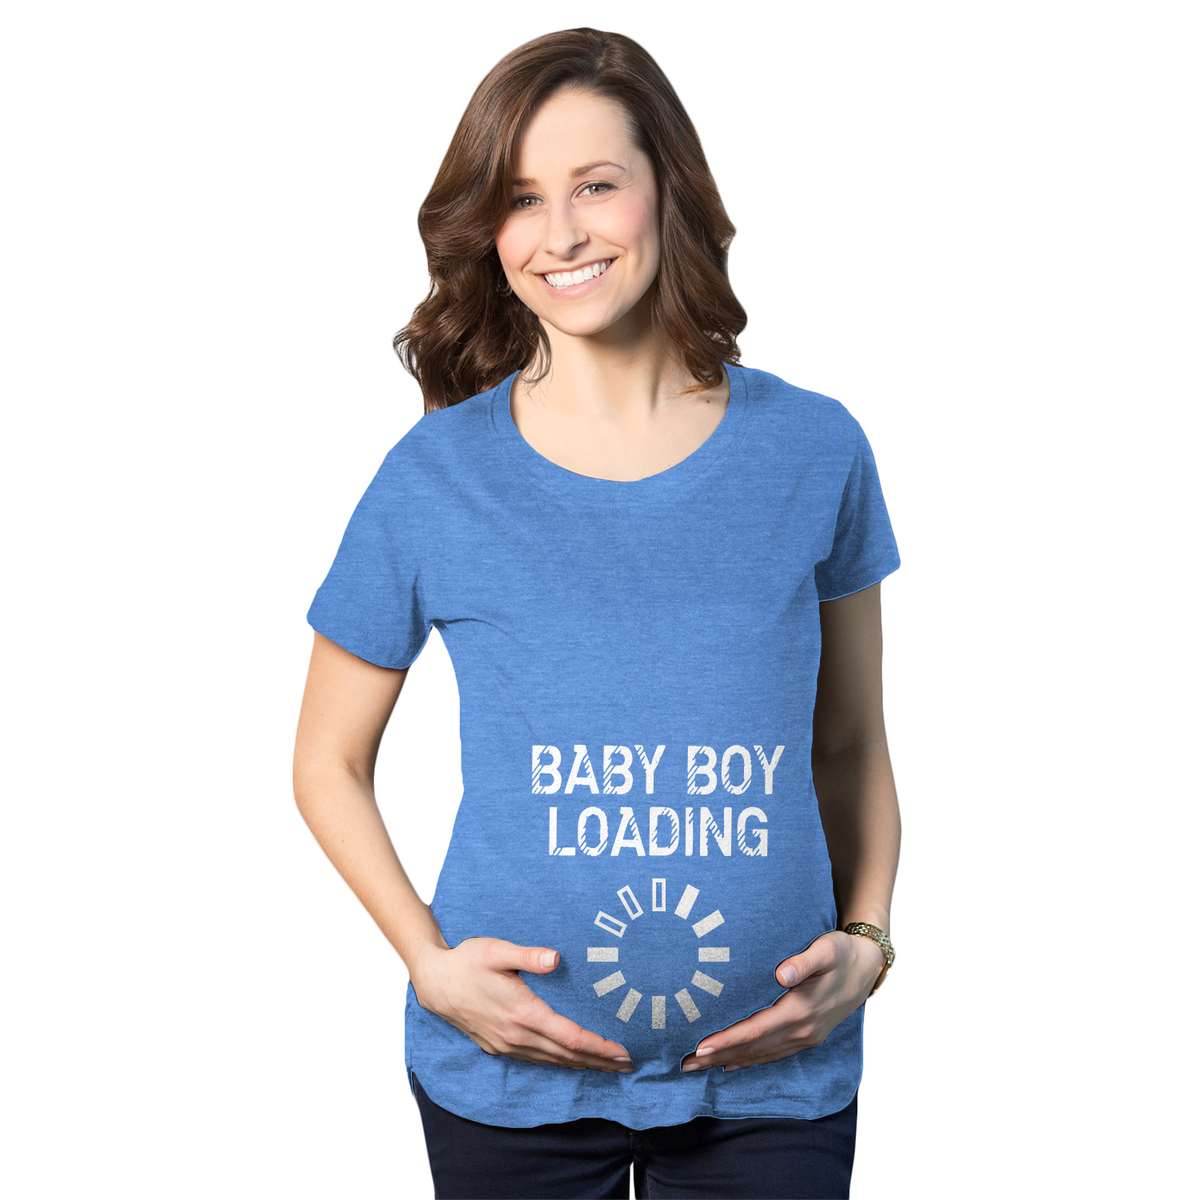 Funny Baby Boy Loading Maternity T Shirt Nerdy Nerdy Tee